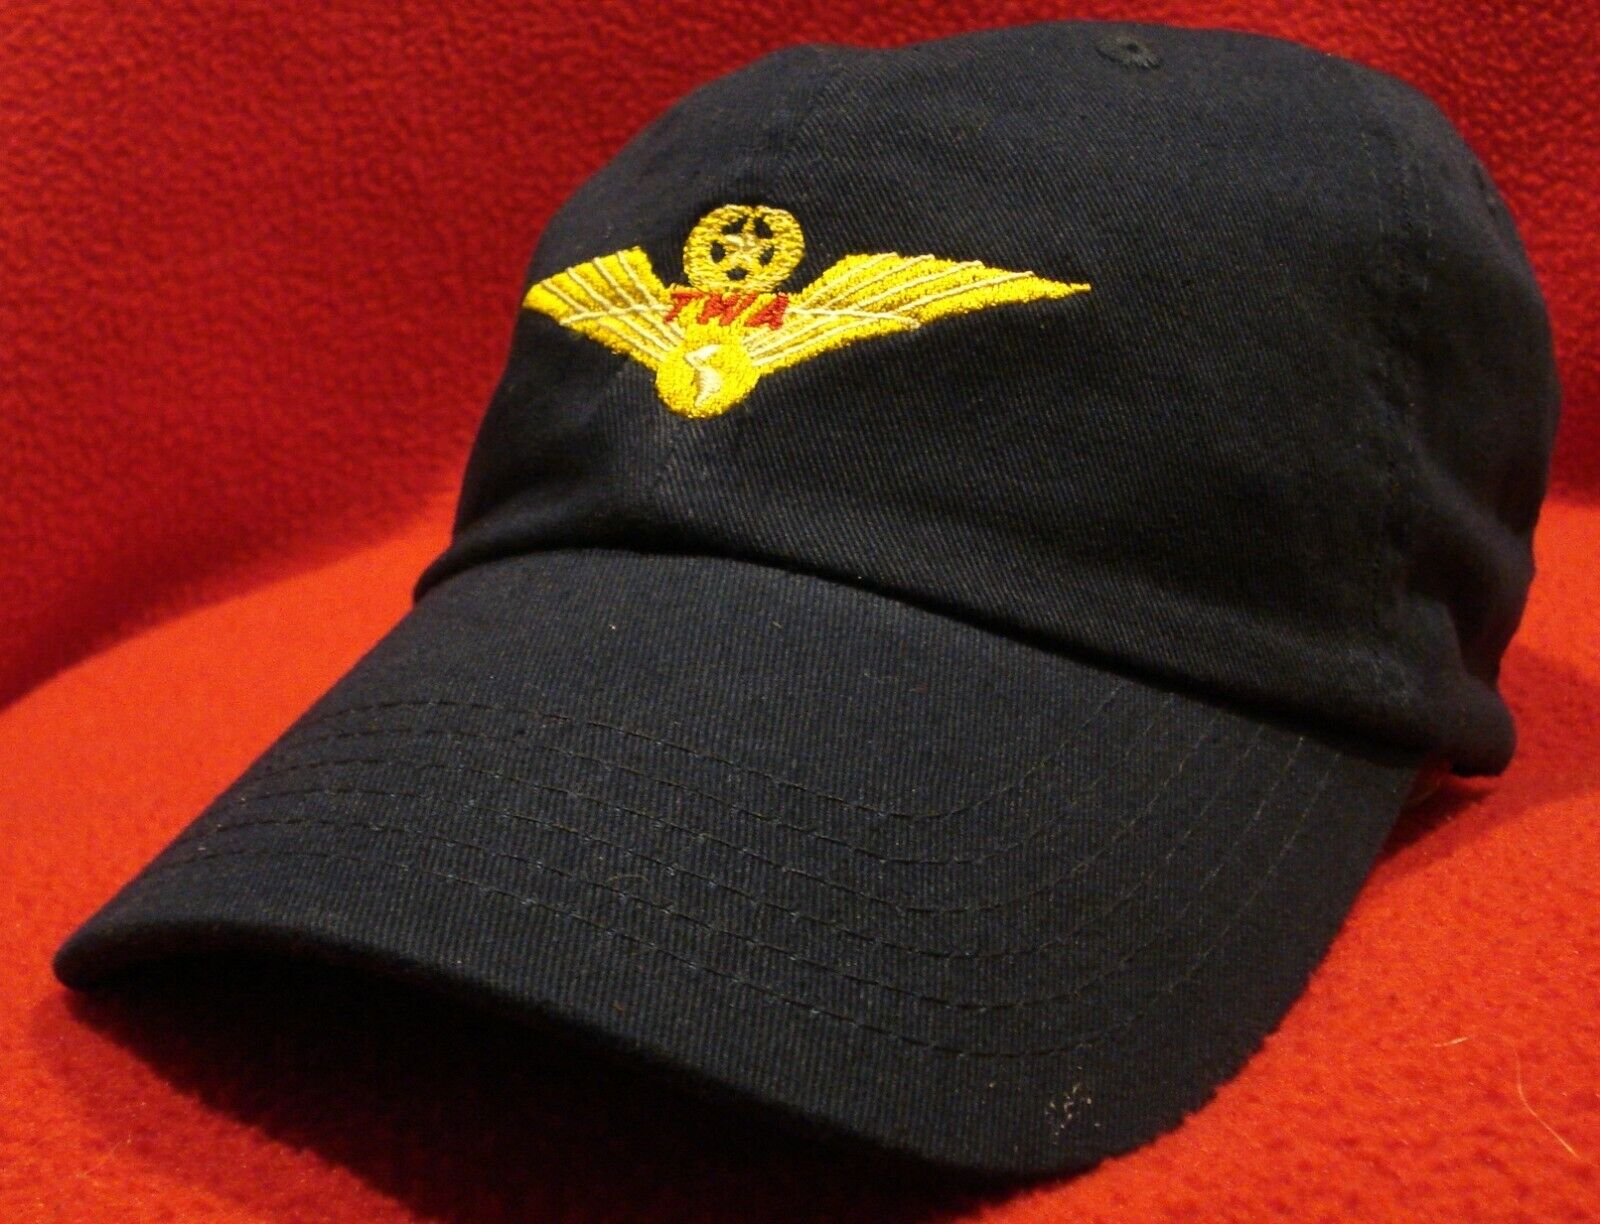 Trans World Airlines Pilot Wings Commemorative ball cap low-profile hat blue